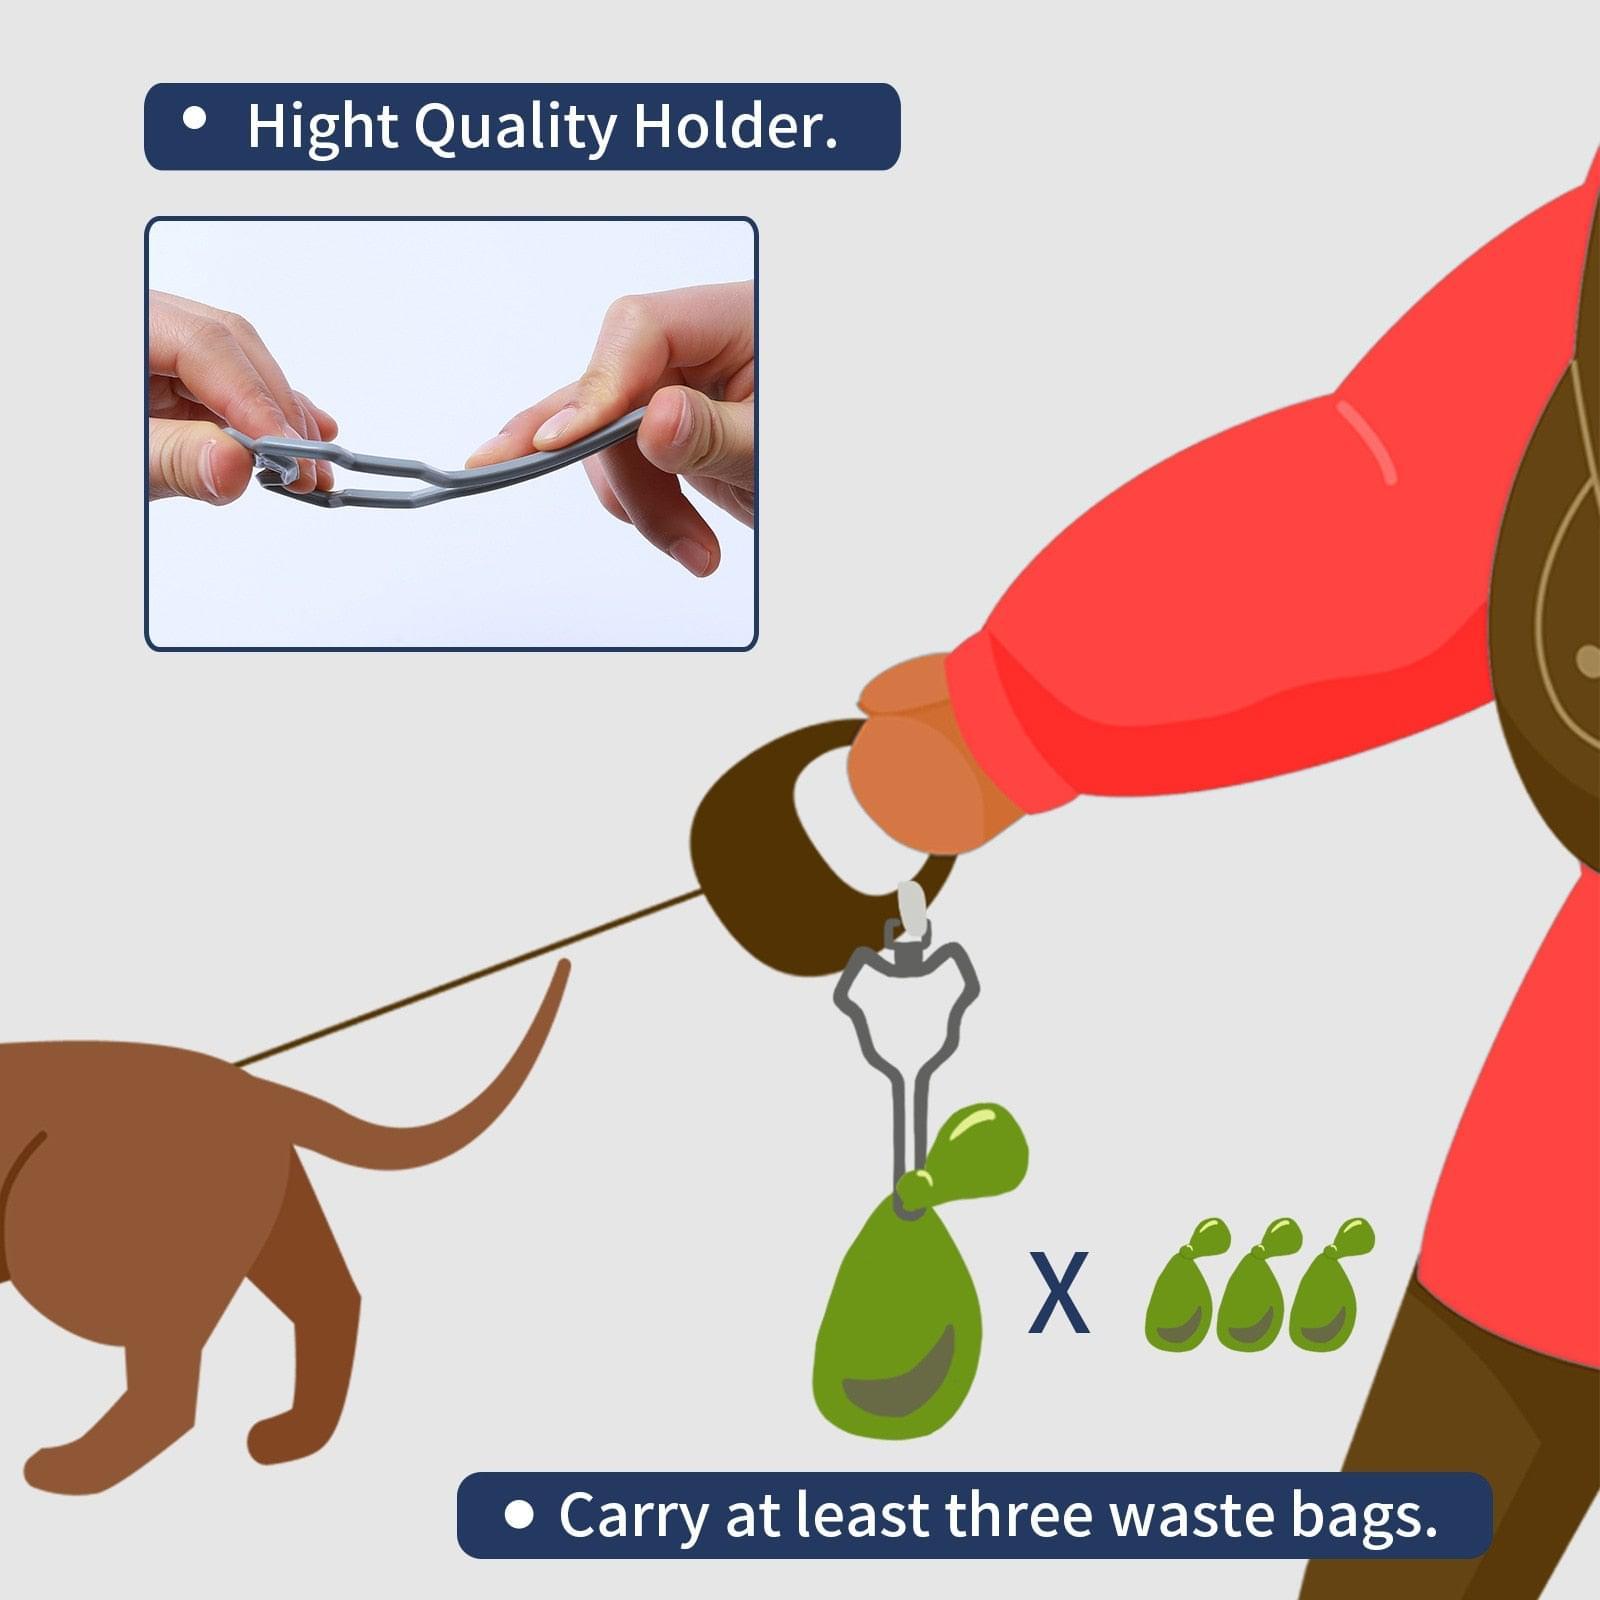 Dog Poop Bags Holder x 2Pcs - Pets Gear